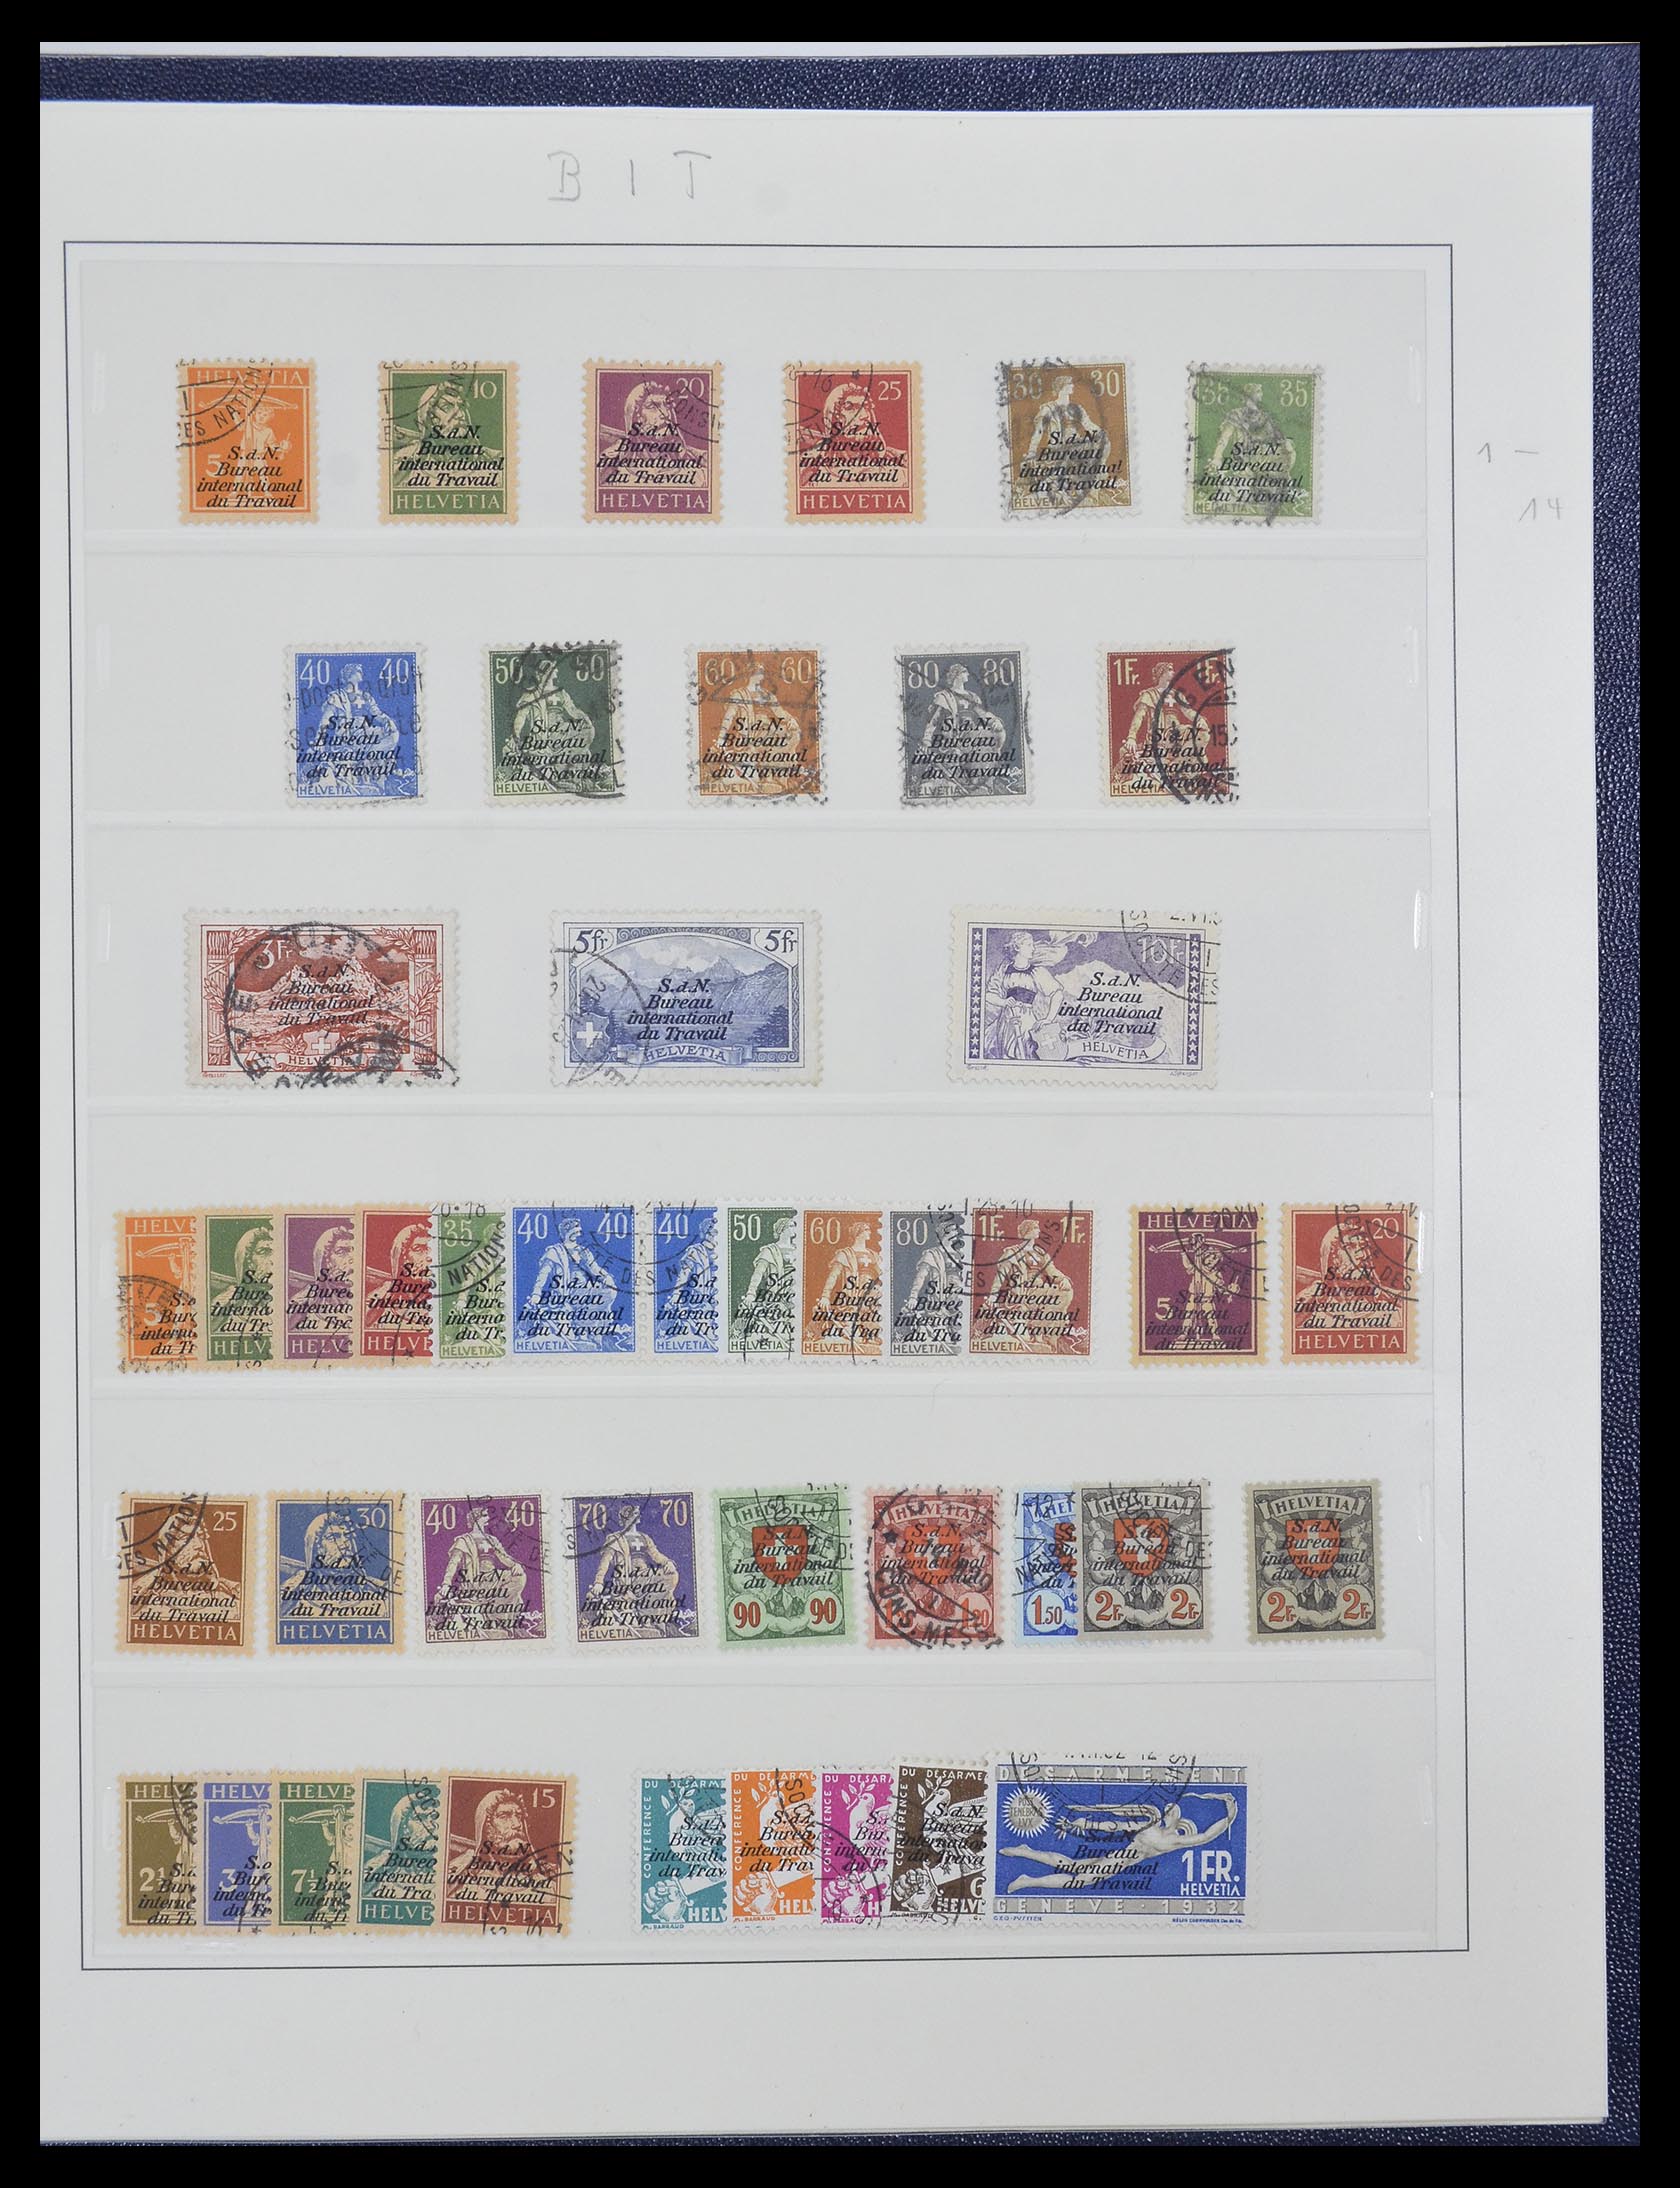 33137 008 - Stamp collection 33137 Switzerland service 1922-2008.